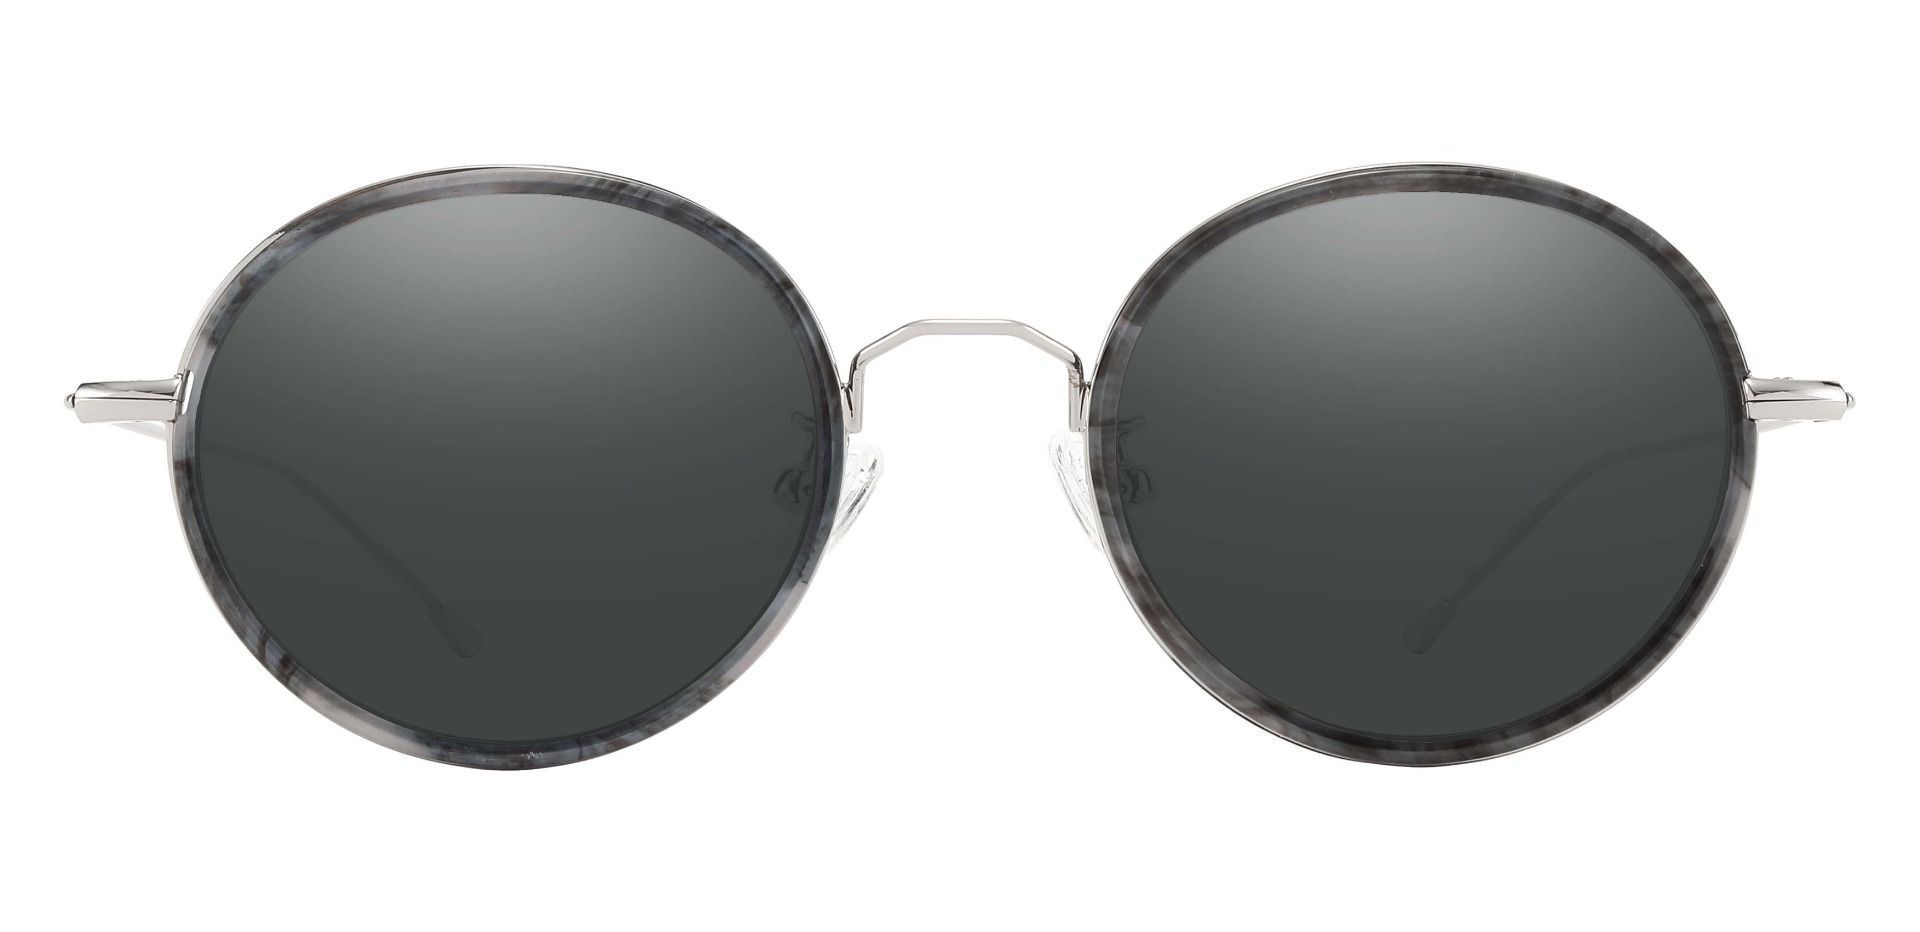 Malverne Oval Progressive Sunglasses - Gray Frame With Gray Lenses